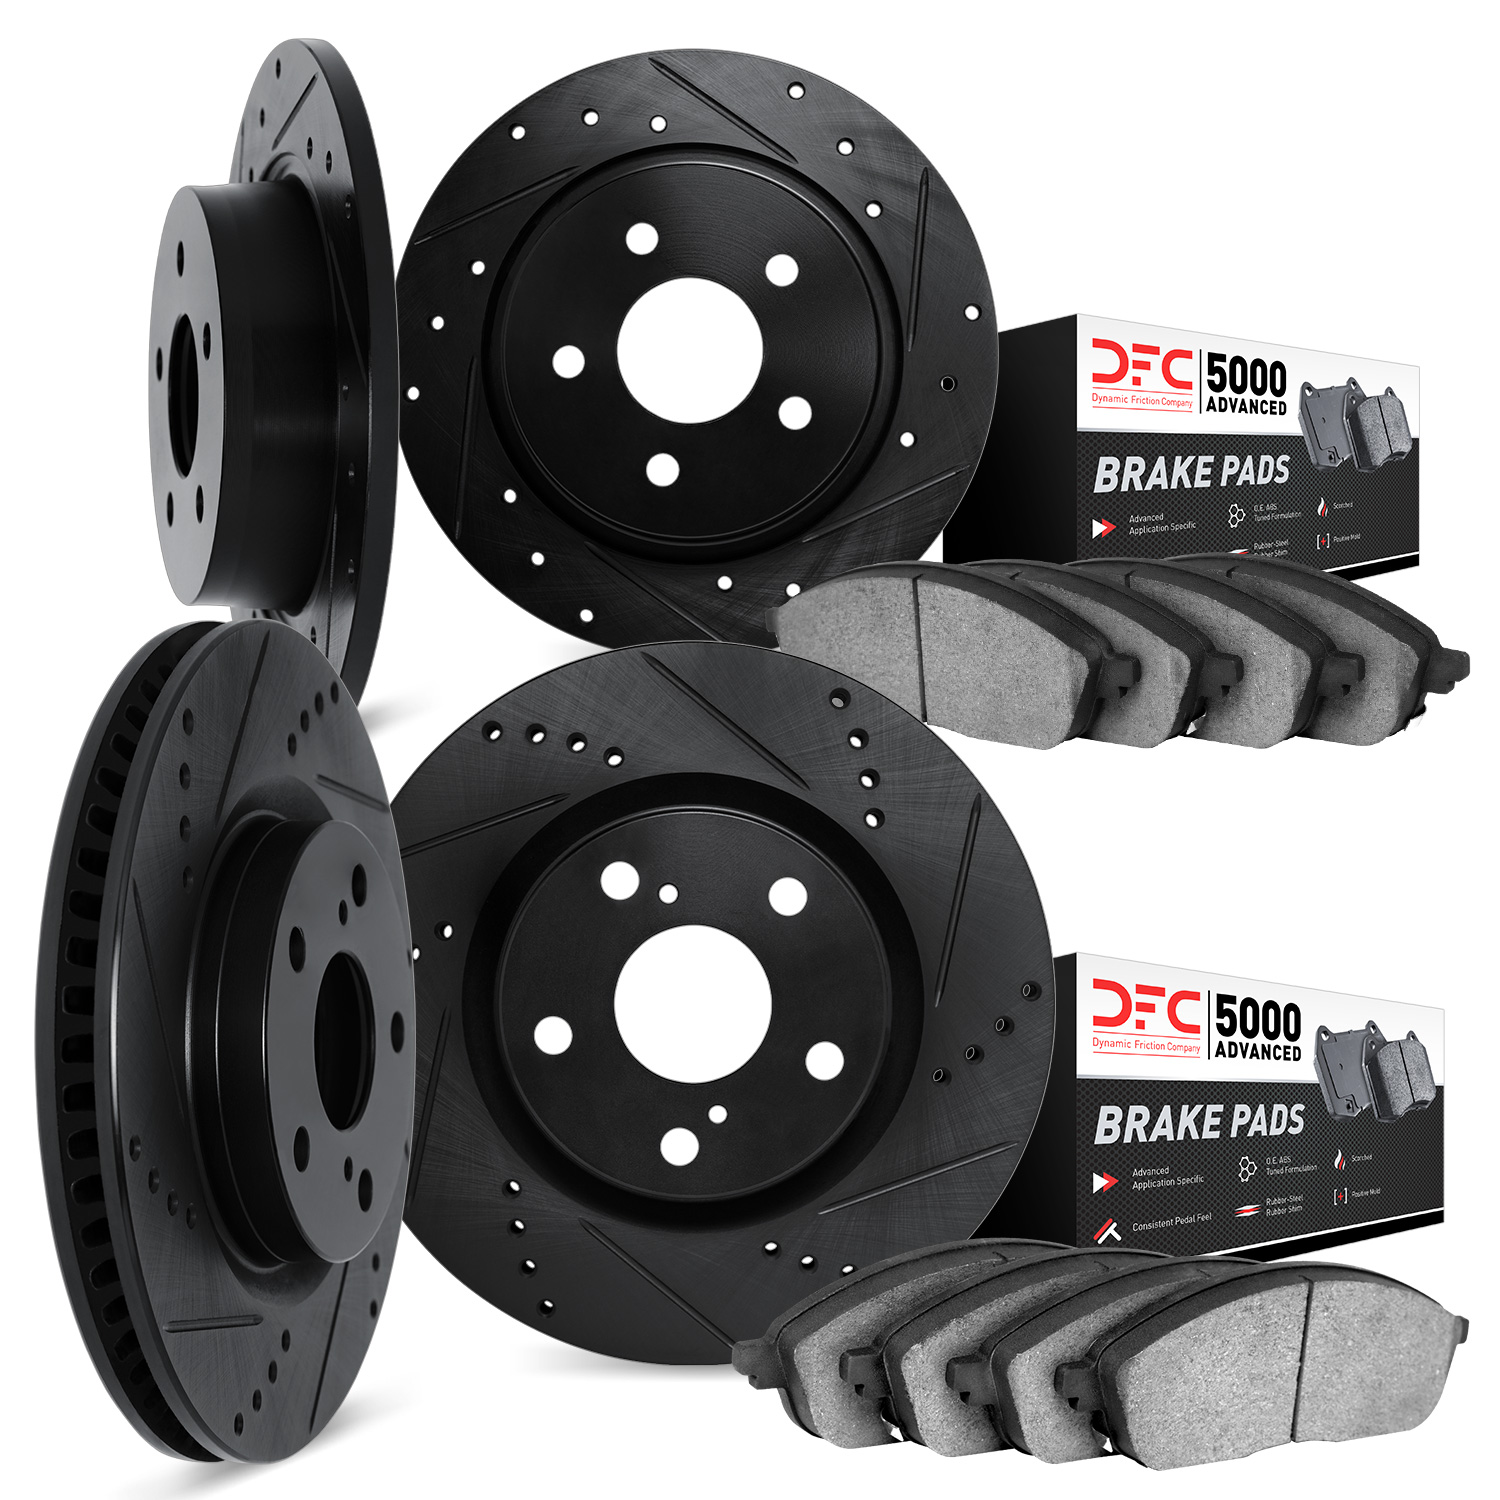 8504-54388 Drilled/Slotted Brake Rotors w/5000 Advanced Brake Pads Kit [Black], 2015-2019 Ford/Lincoln/Mercury/Mazda, Position: